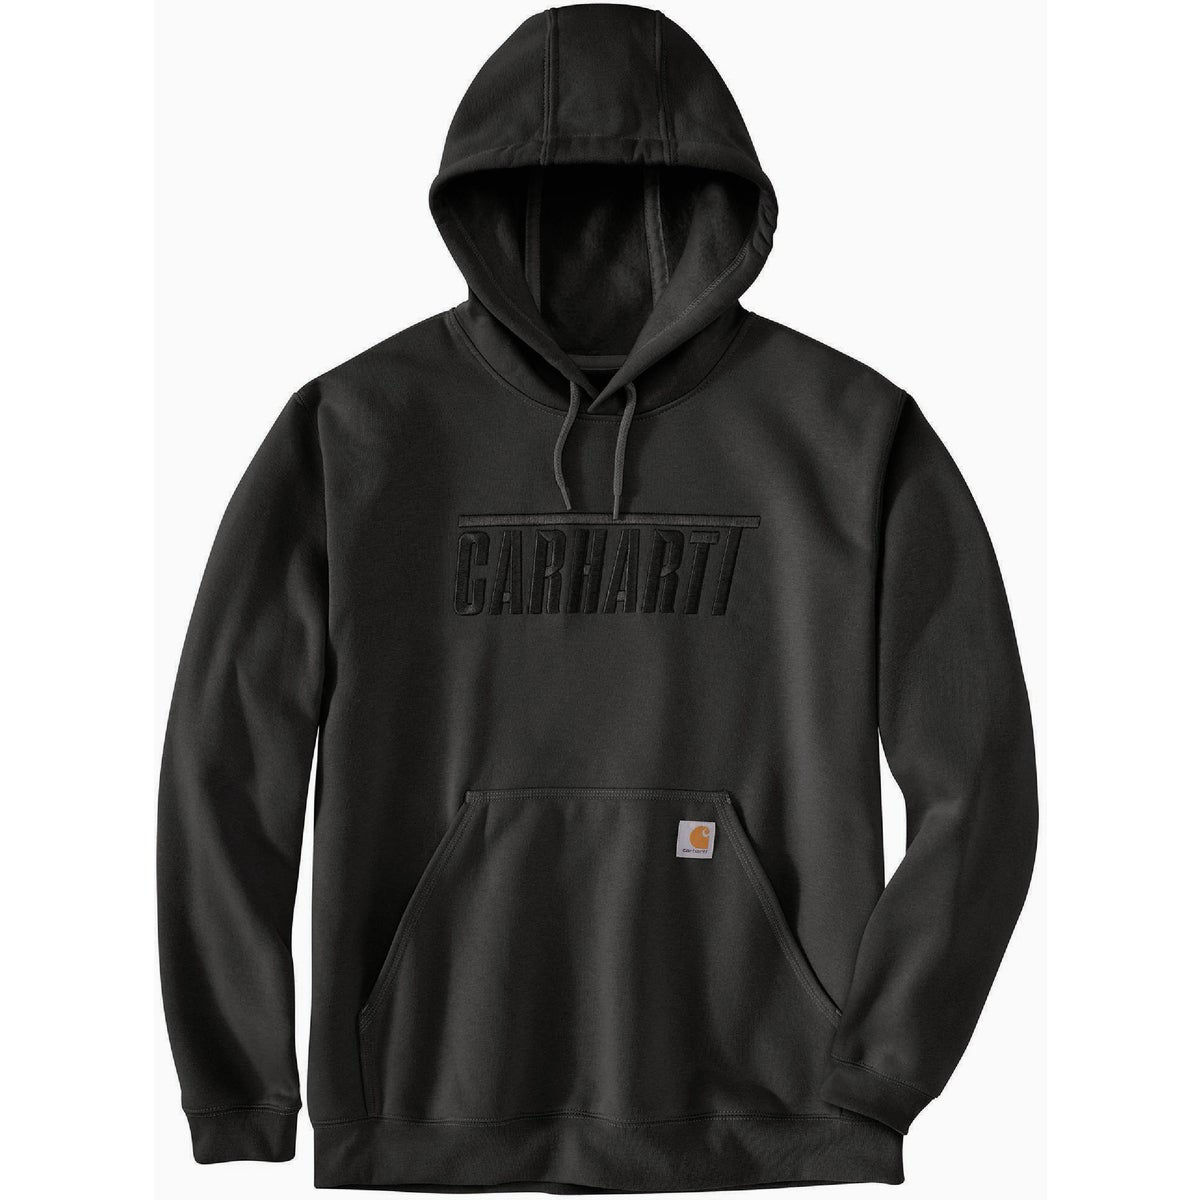 Carhartt Men’s Midweight Pullover Hooded Sweatshirt - Black